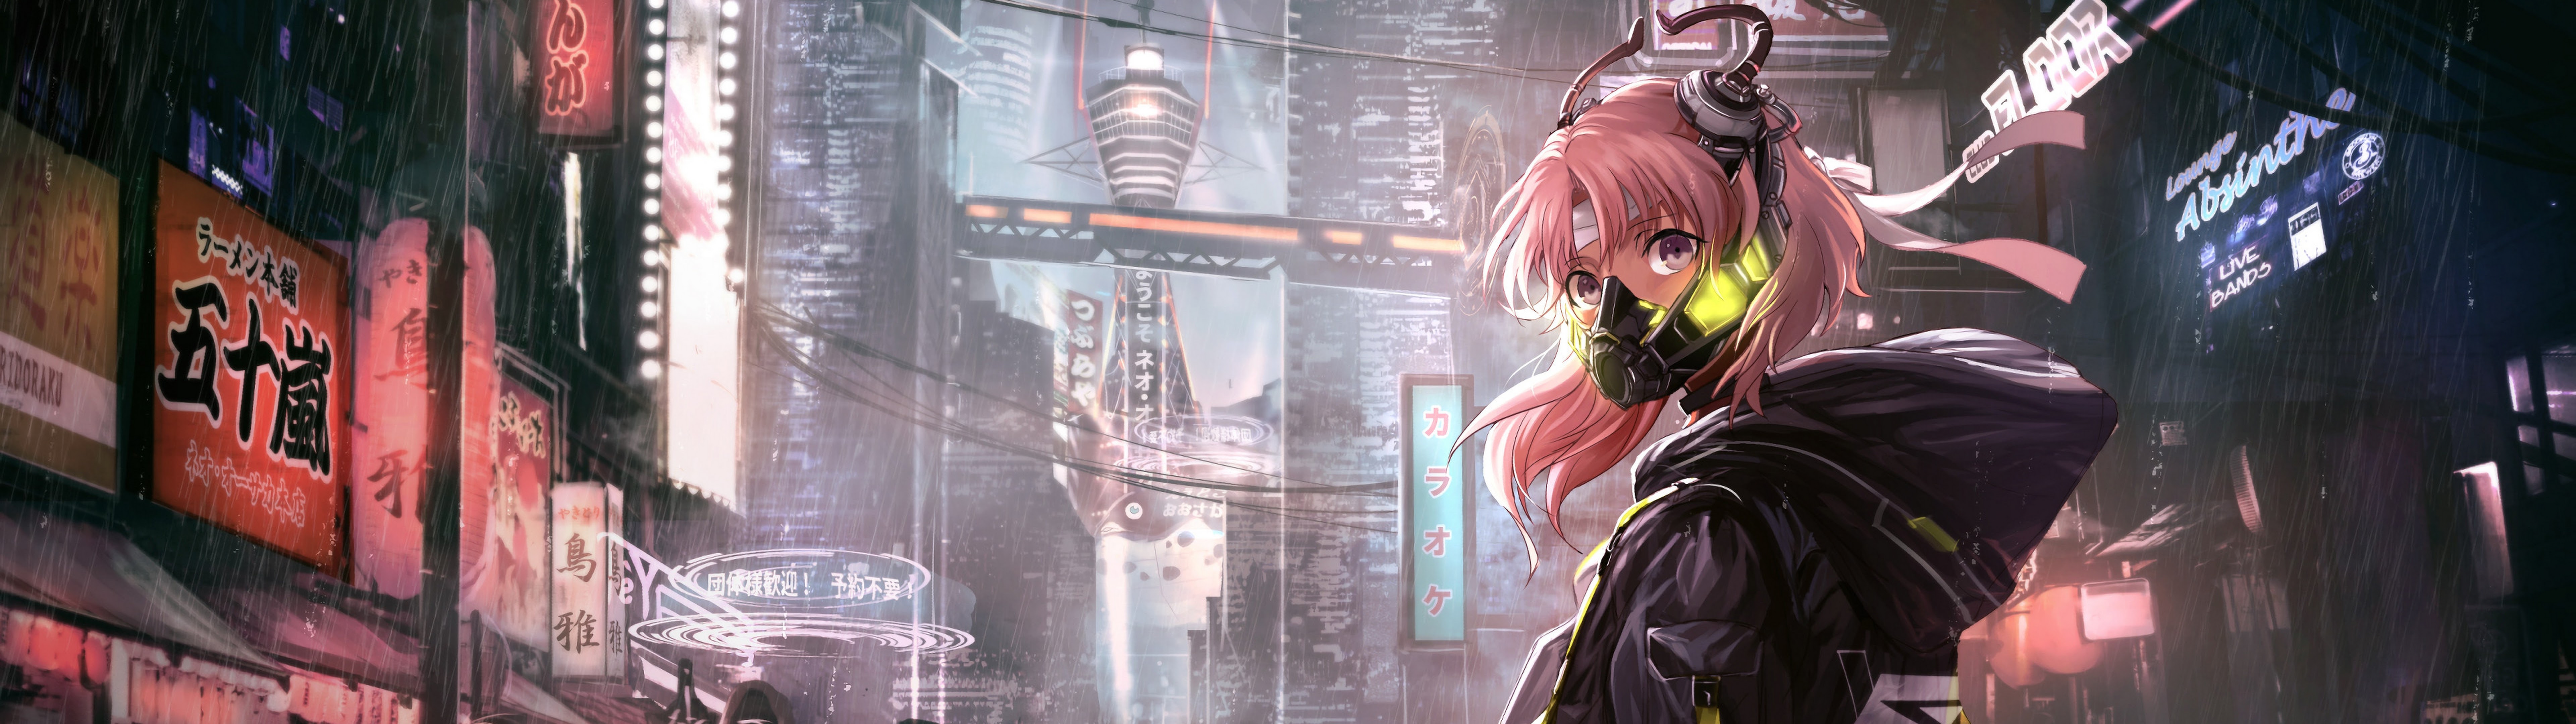 cyberpunk anime girl Wallpapers